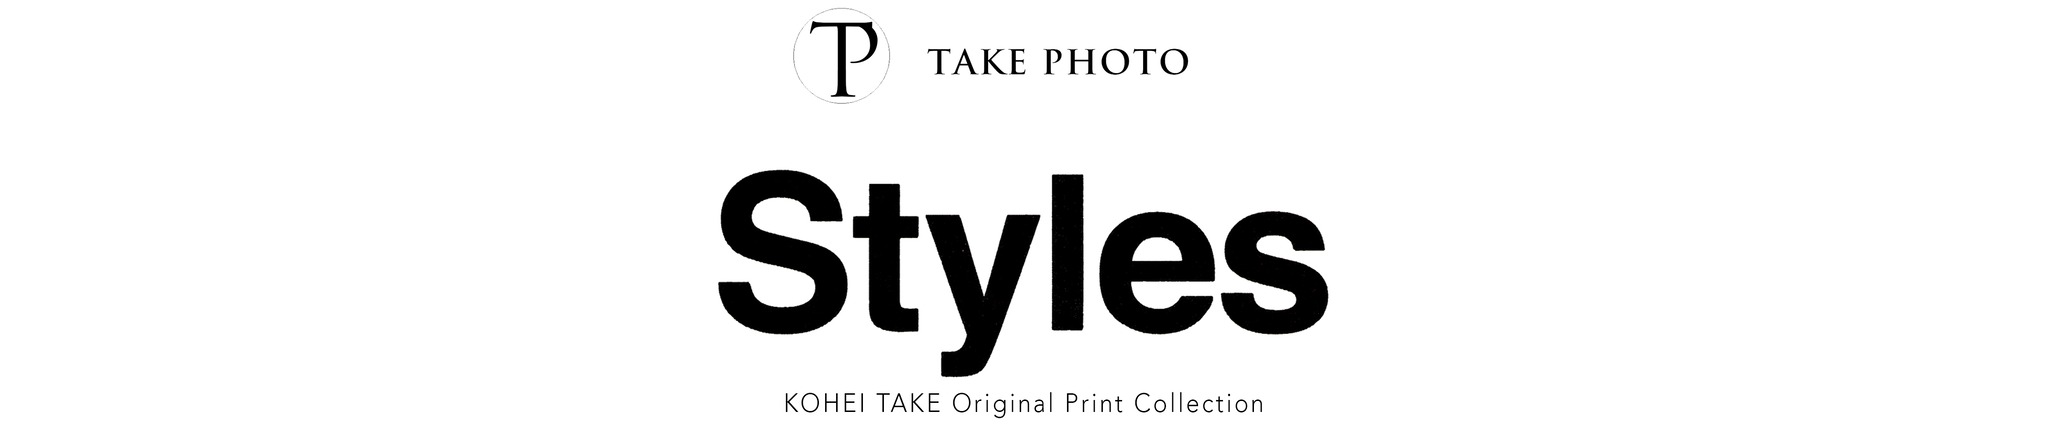 TAKE PHOTO「Styles」